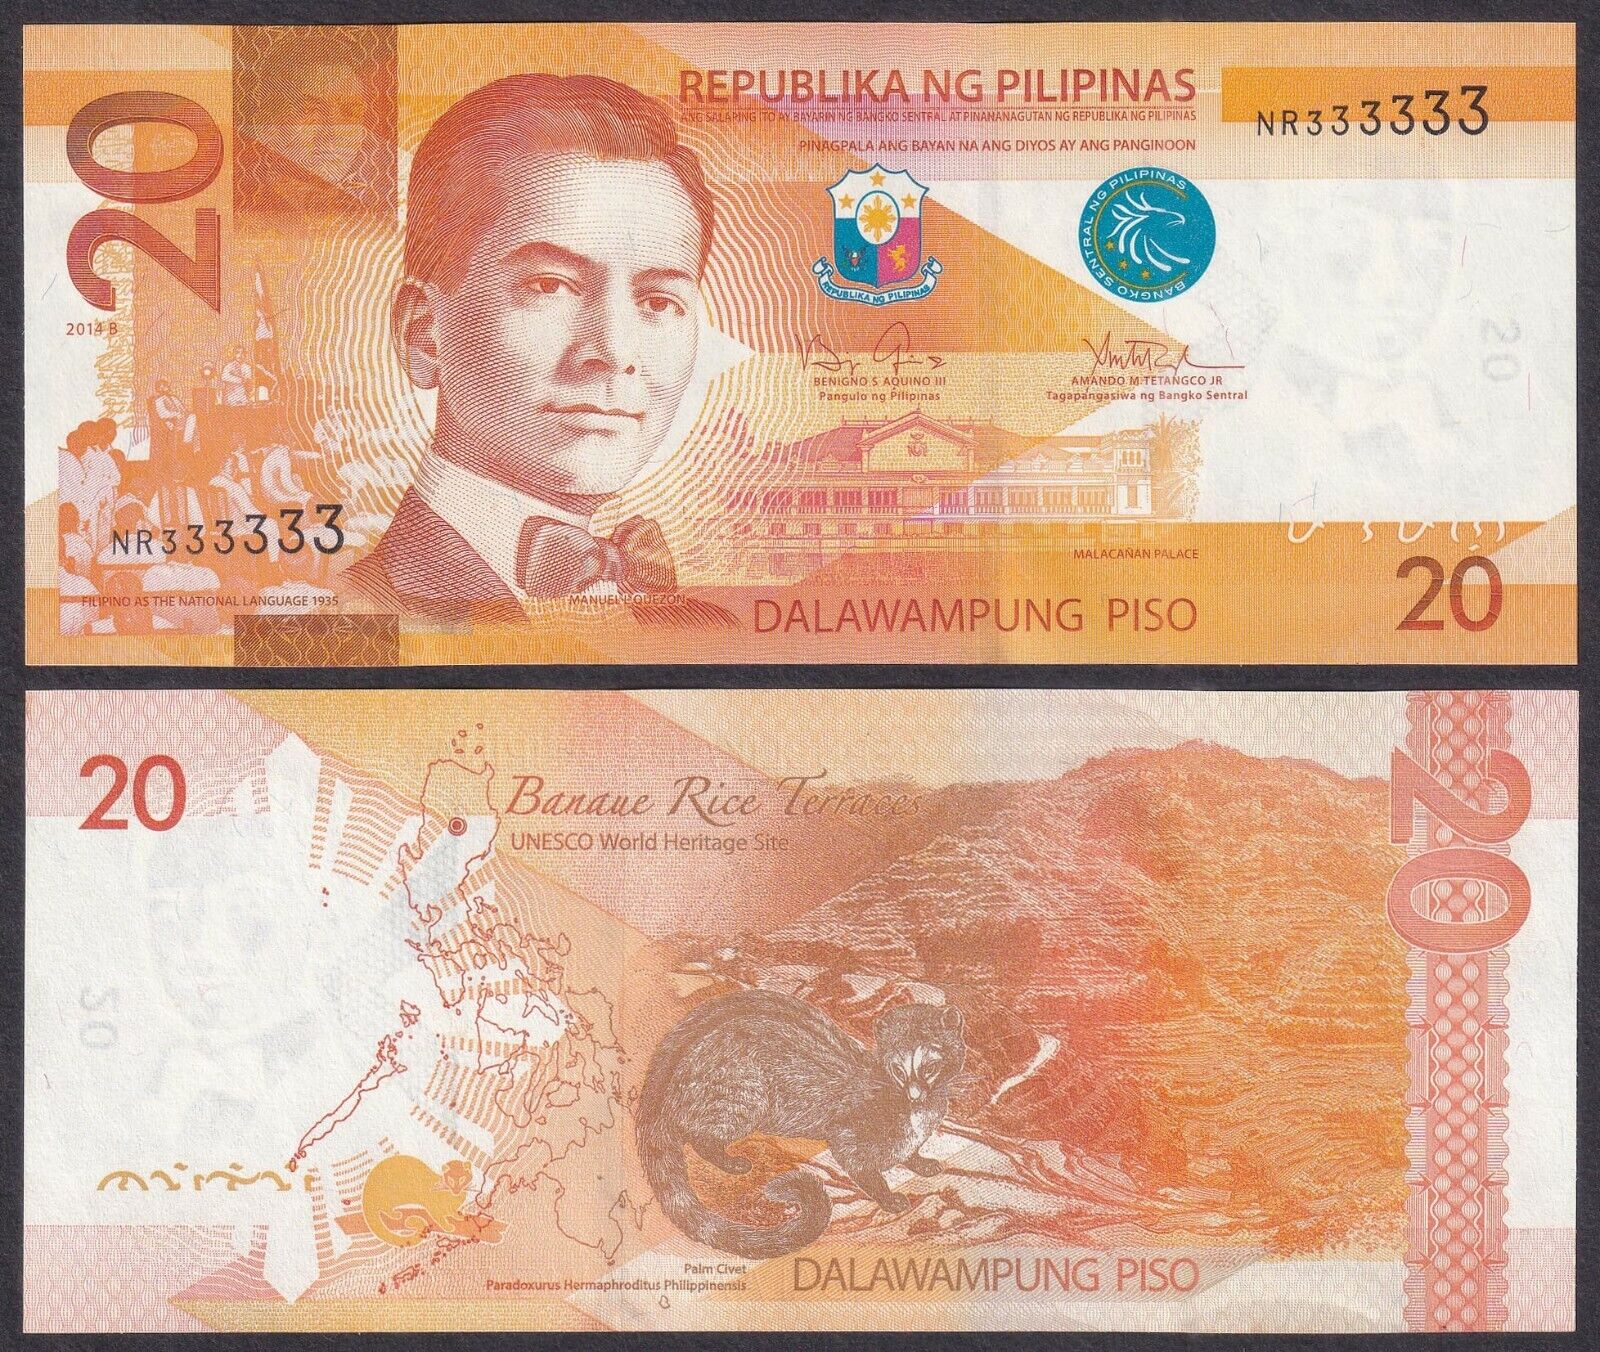 2014 NEW GENERATION 20 Pesos Pnoy Aquino SOLID NO. NR333333 Philippine Banknote